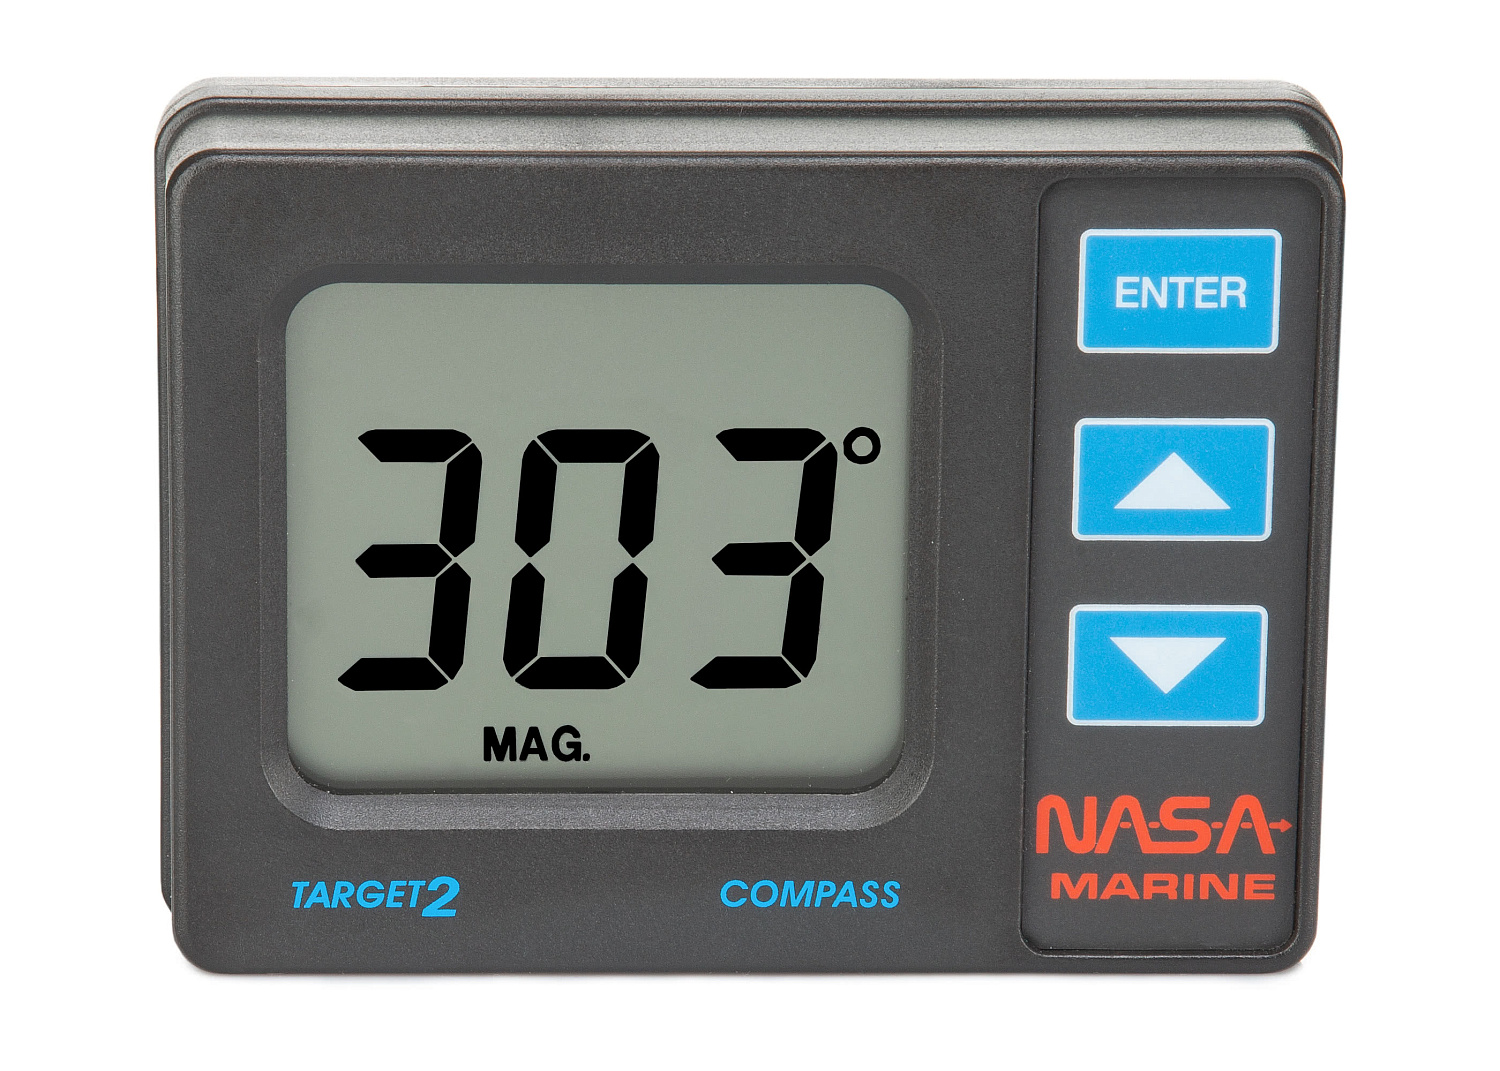 NASA MARINE TARGET 2 Compass